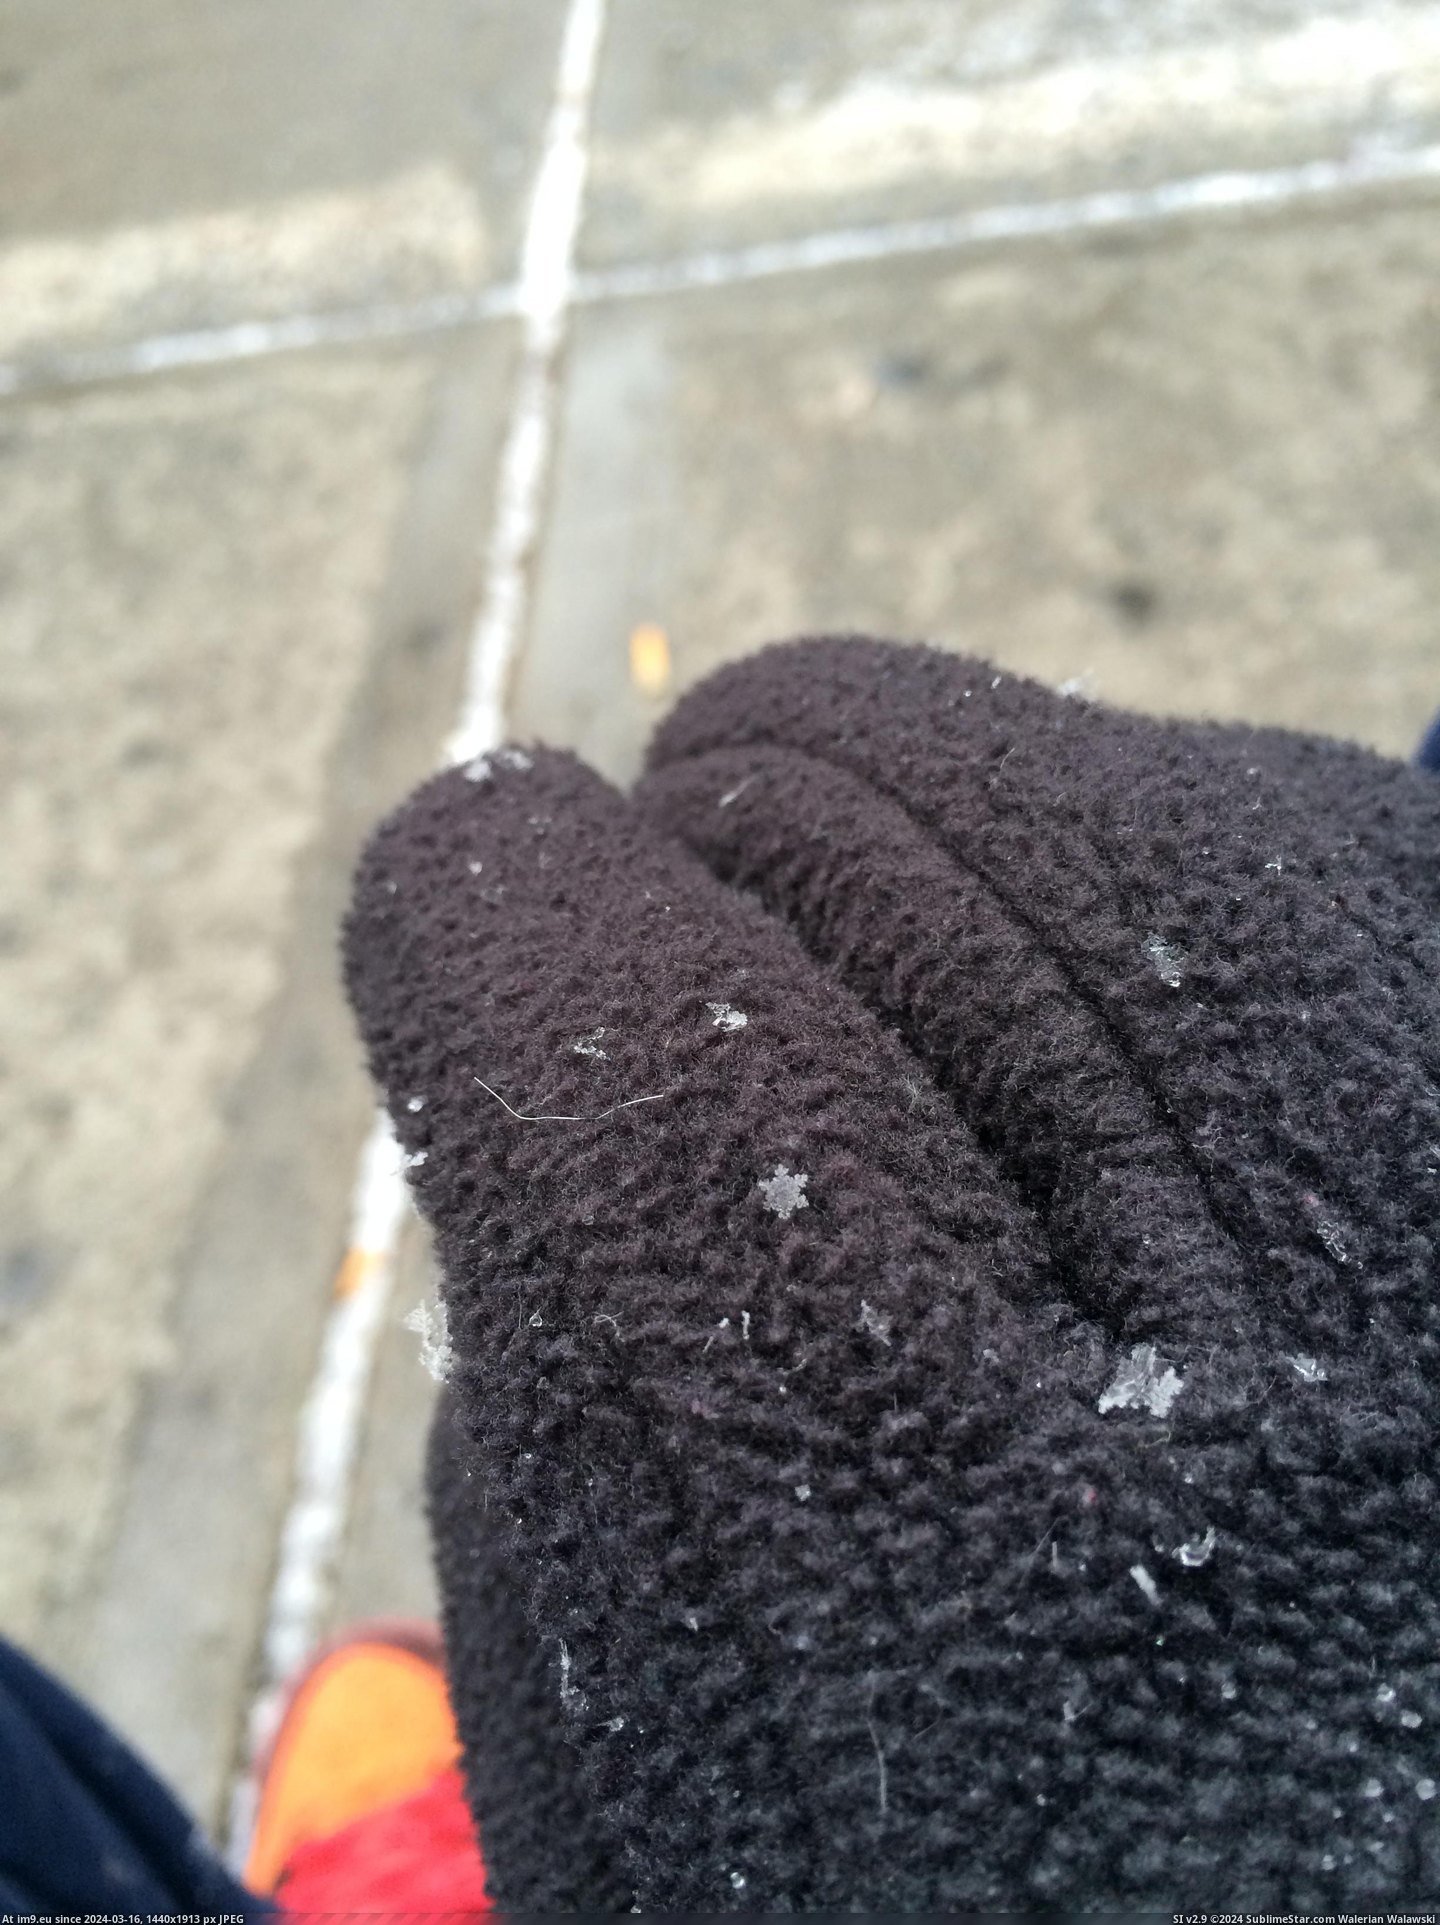 #Perfect #Landed #Glove #Snowflake [Pics] A near-perfect snowflake just landed on my glove Pic. (Bild von album My r/PICS favs))